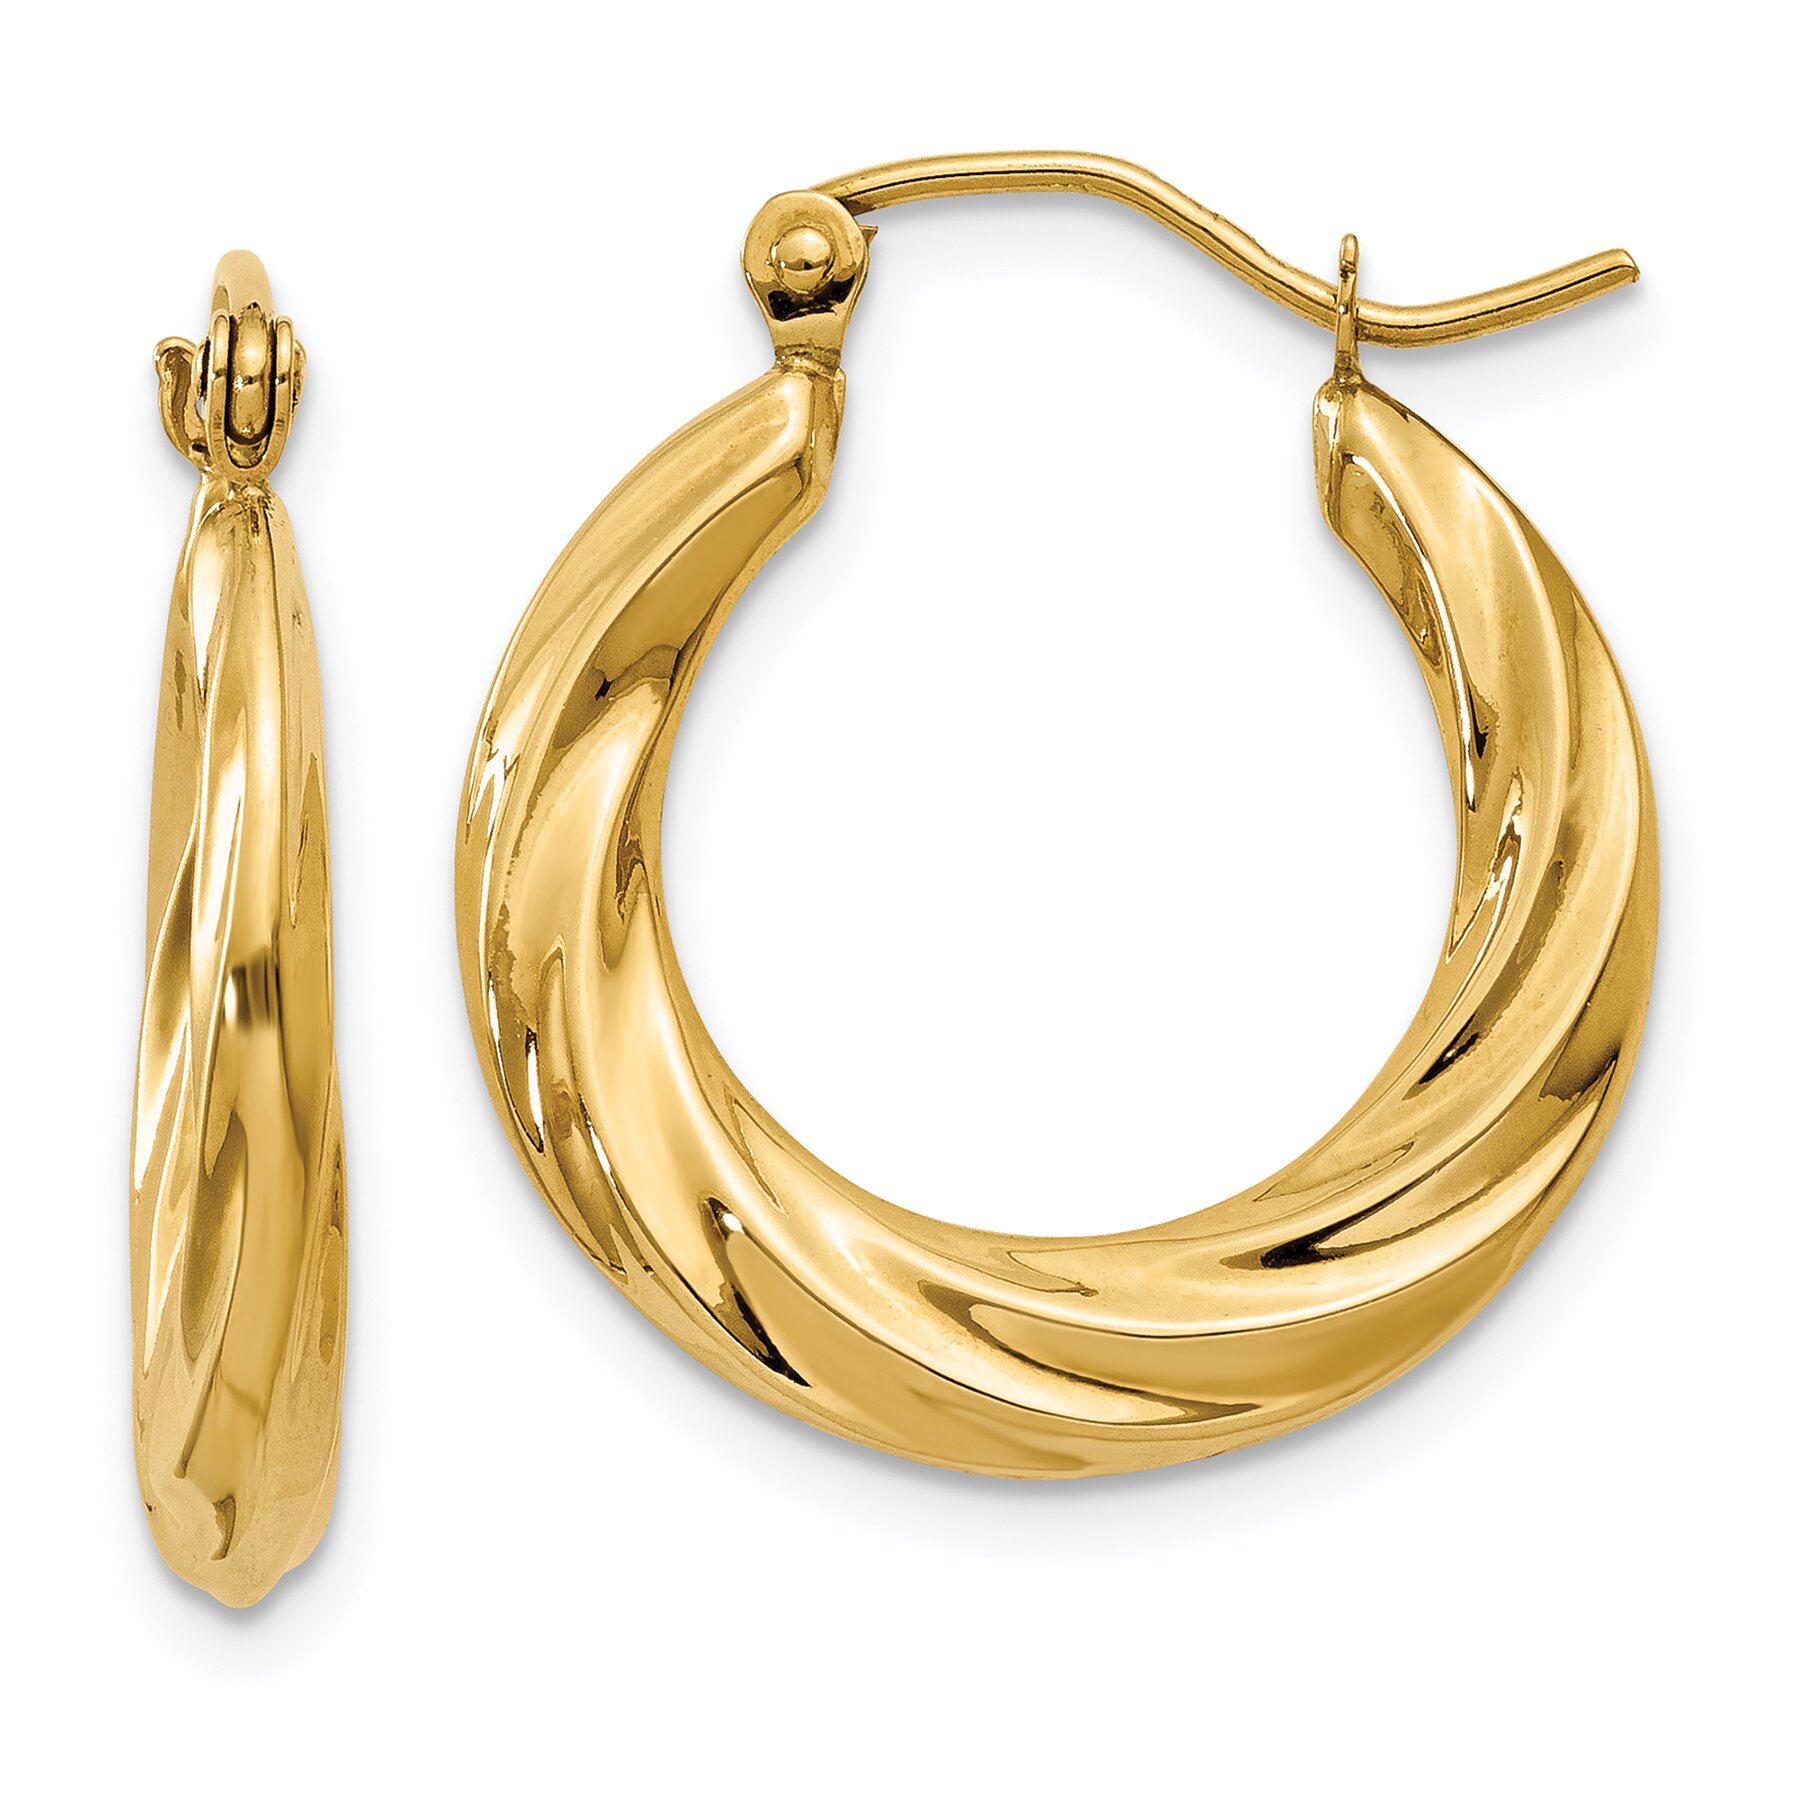 Findingking 14K Yellow Gold Twisted Hollow Hoop Earrings Jewelry